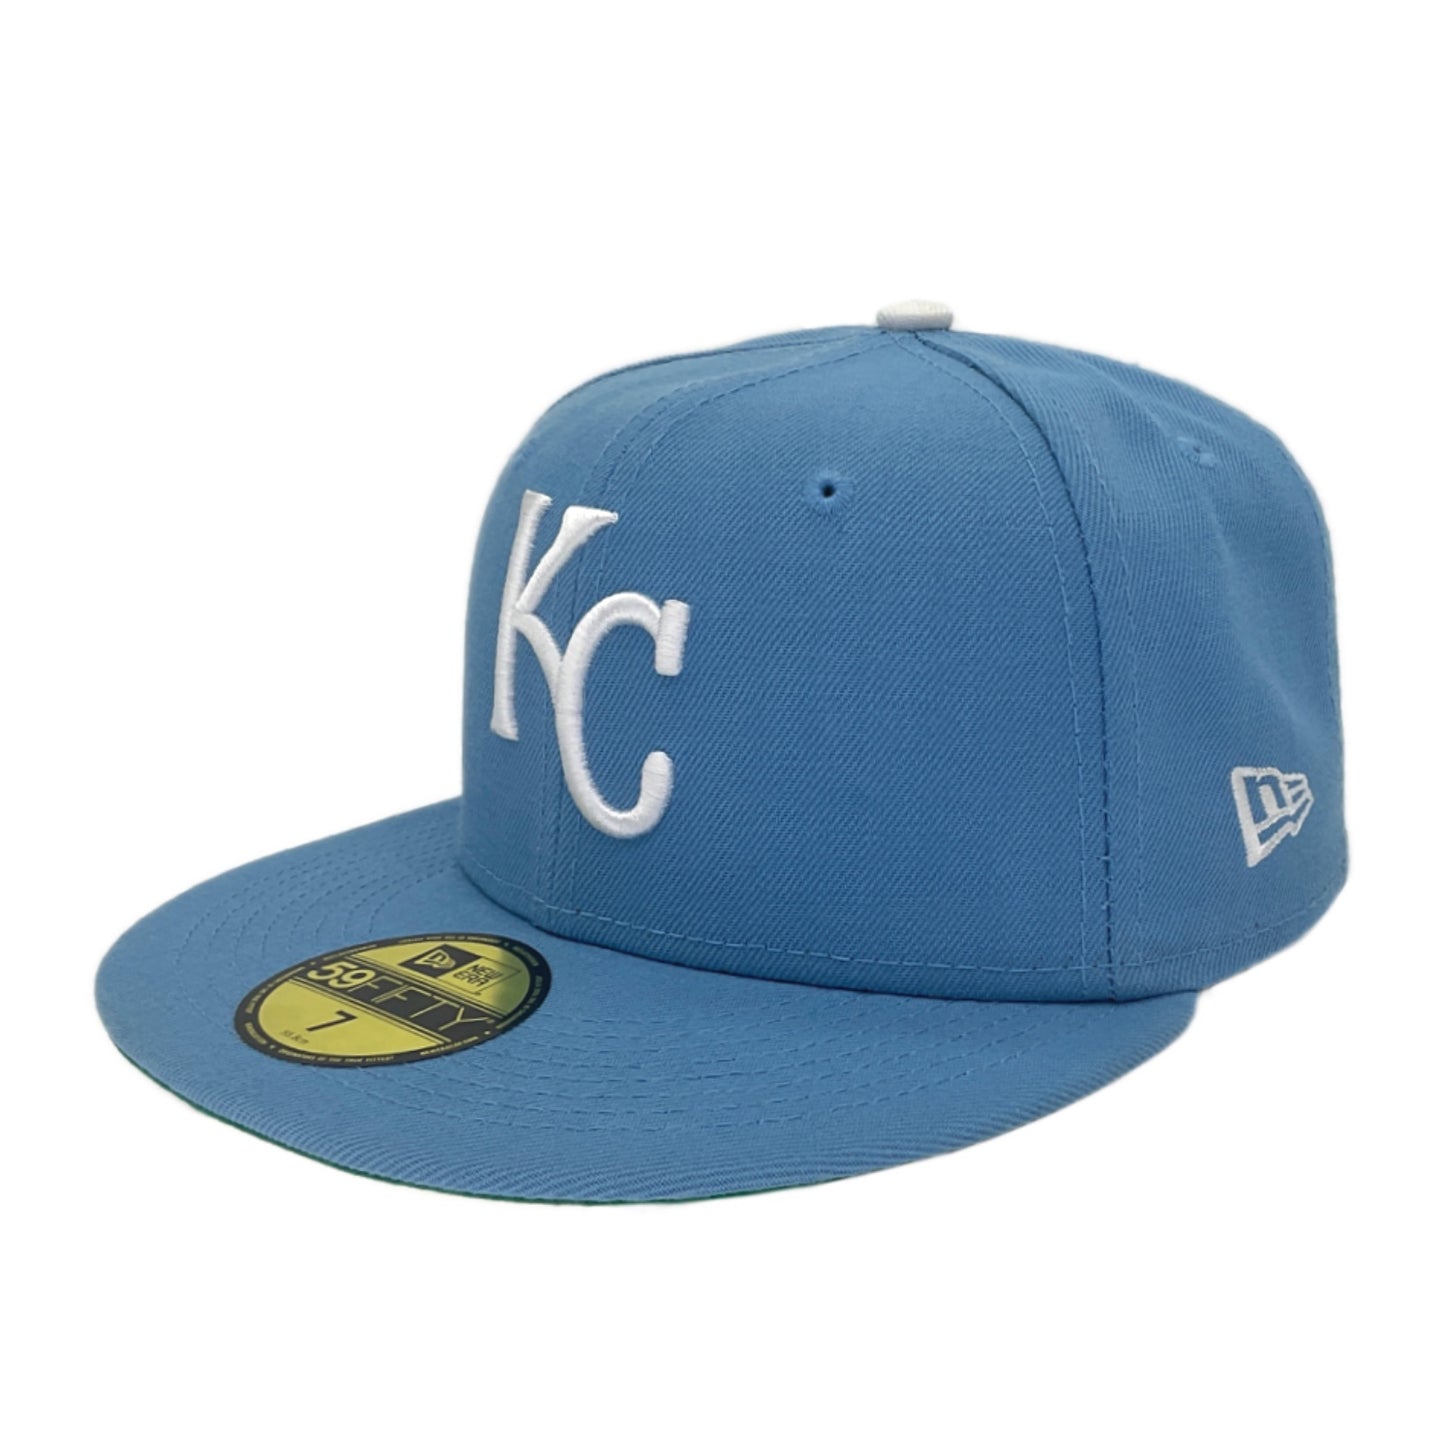 Kansas City Royals Custom New Era Cap Sky Blue